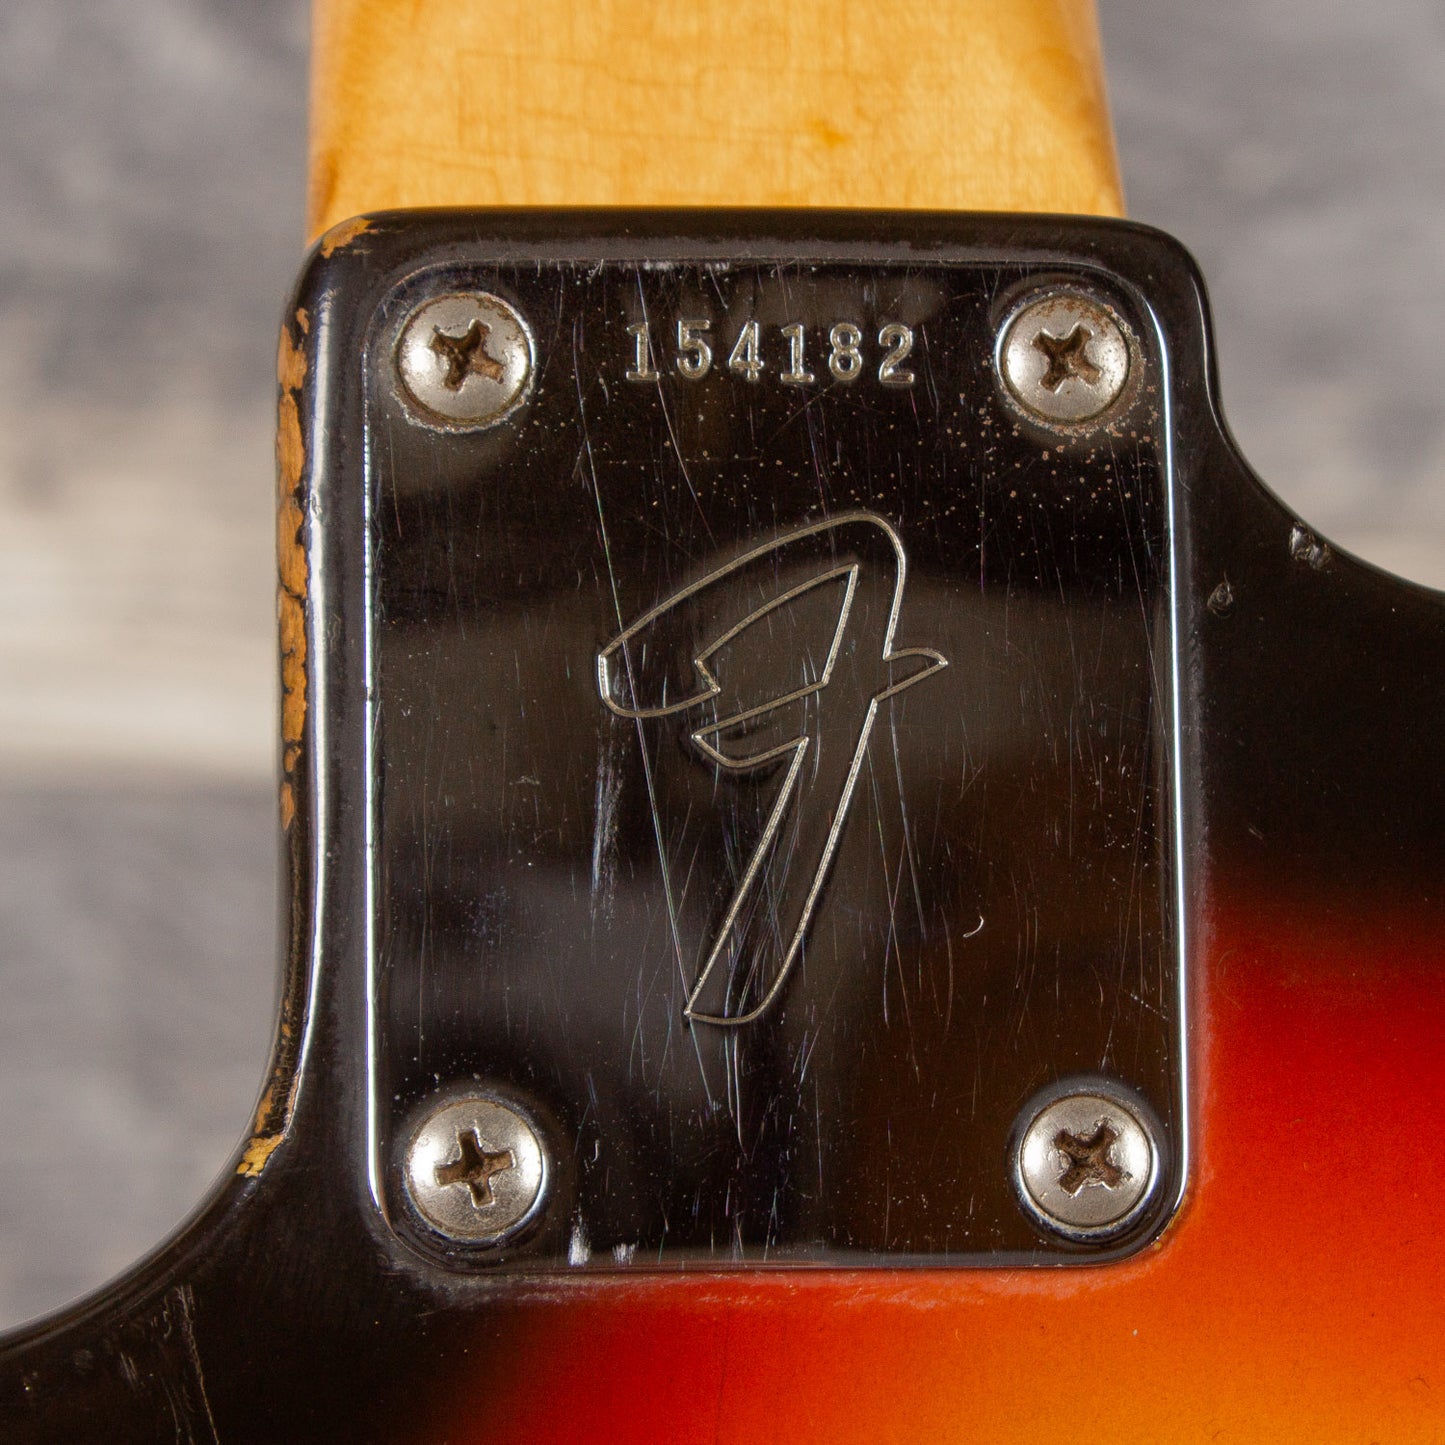 1968 Fender Electric XII - Sunburst